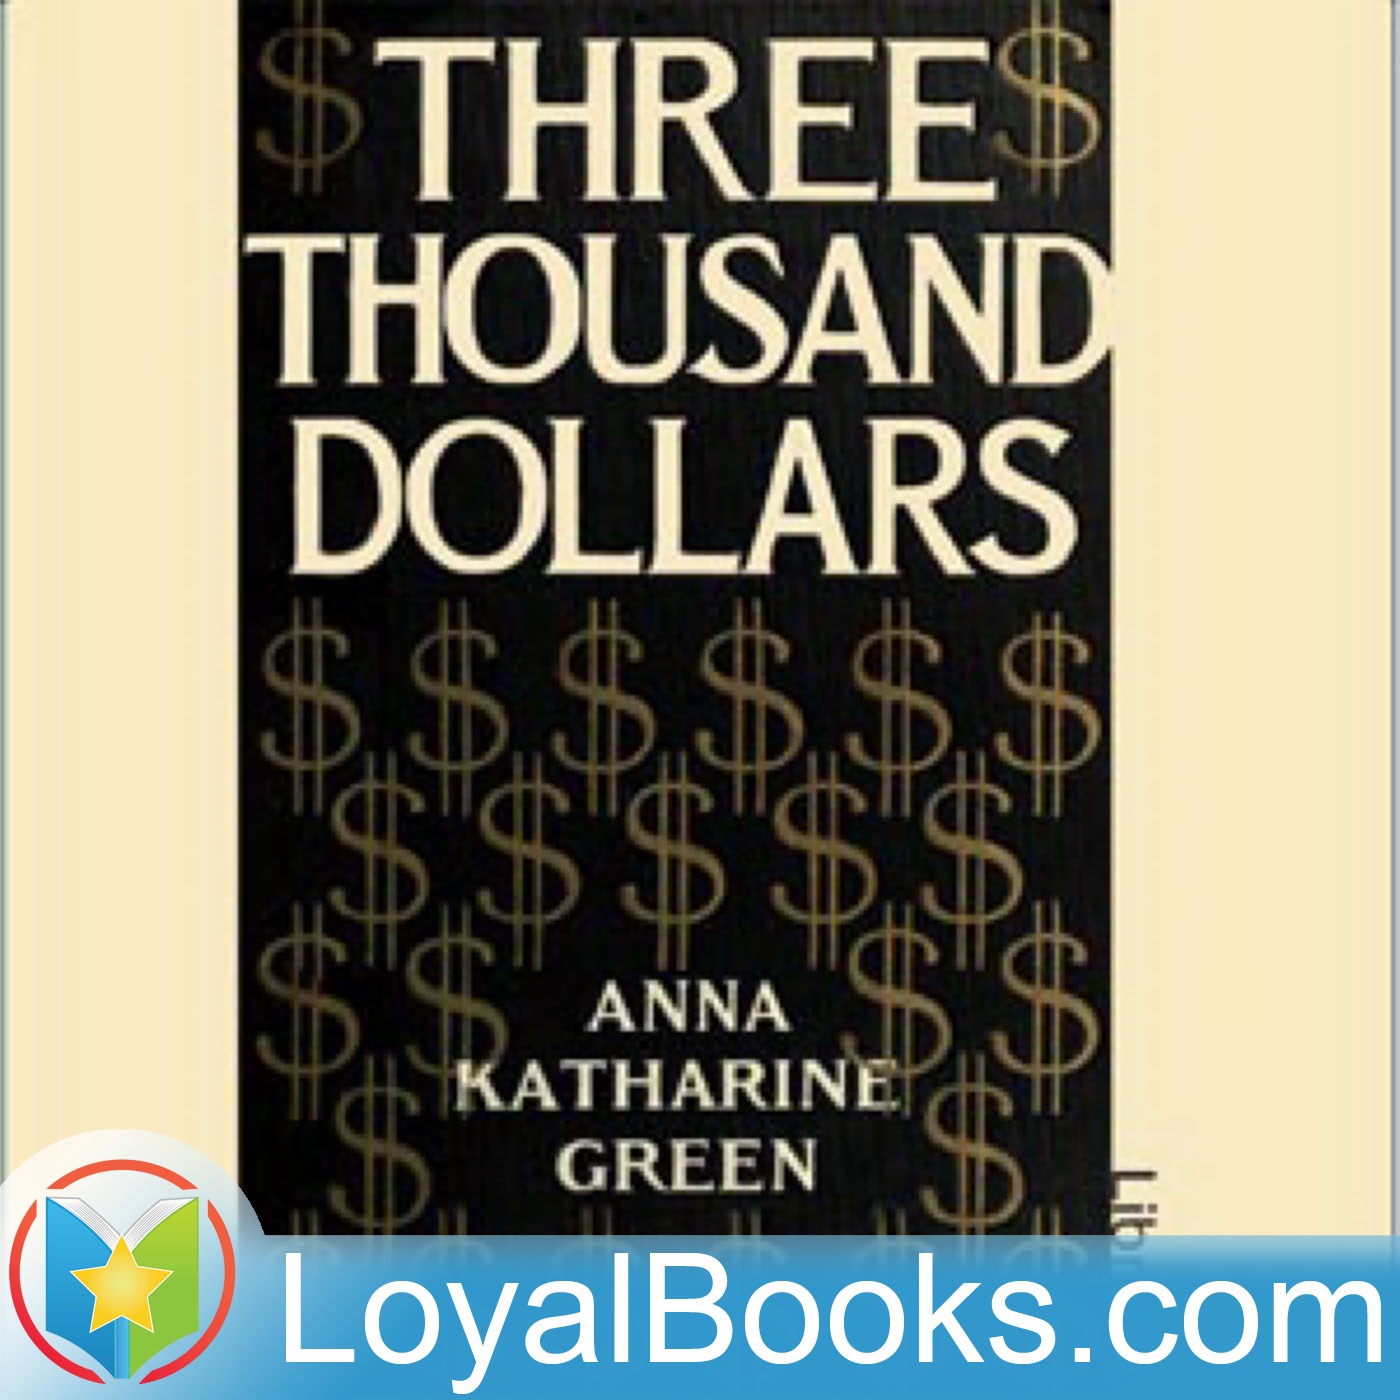 Three Thousand Dollars by Anna Katharine Green